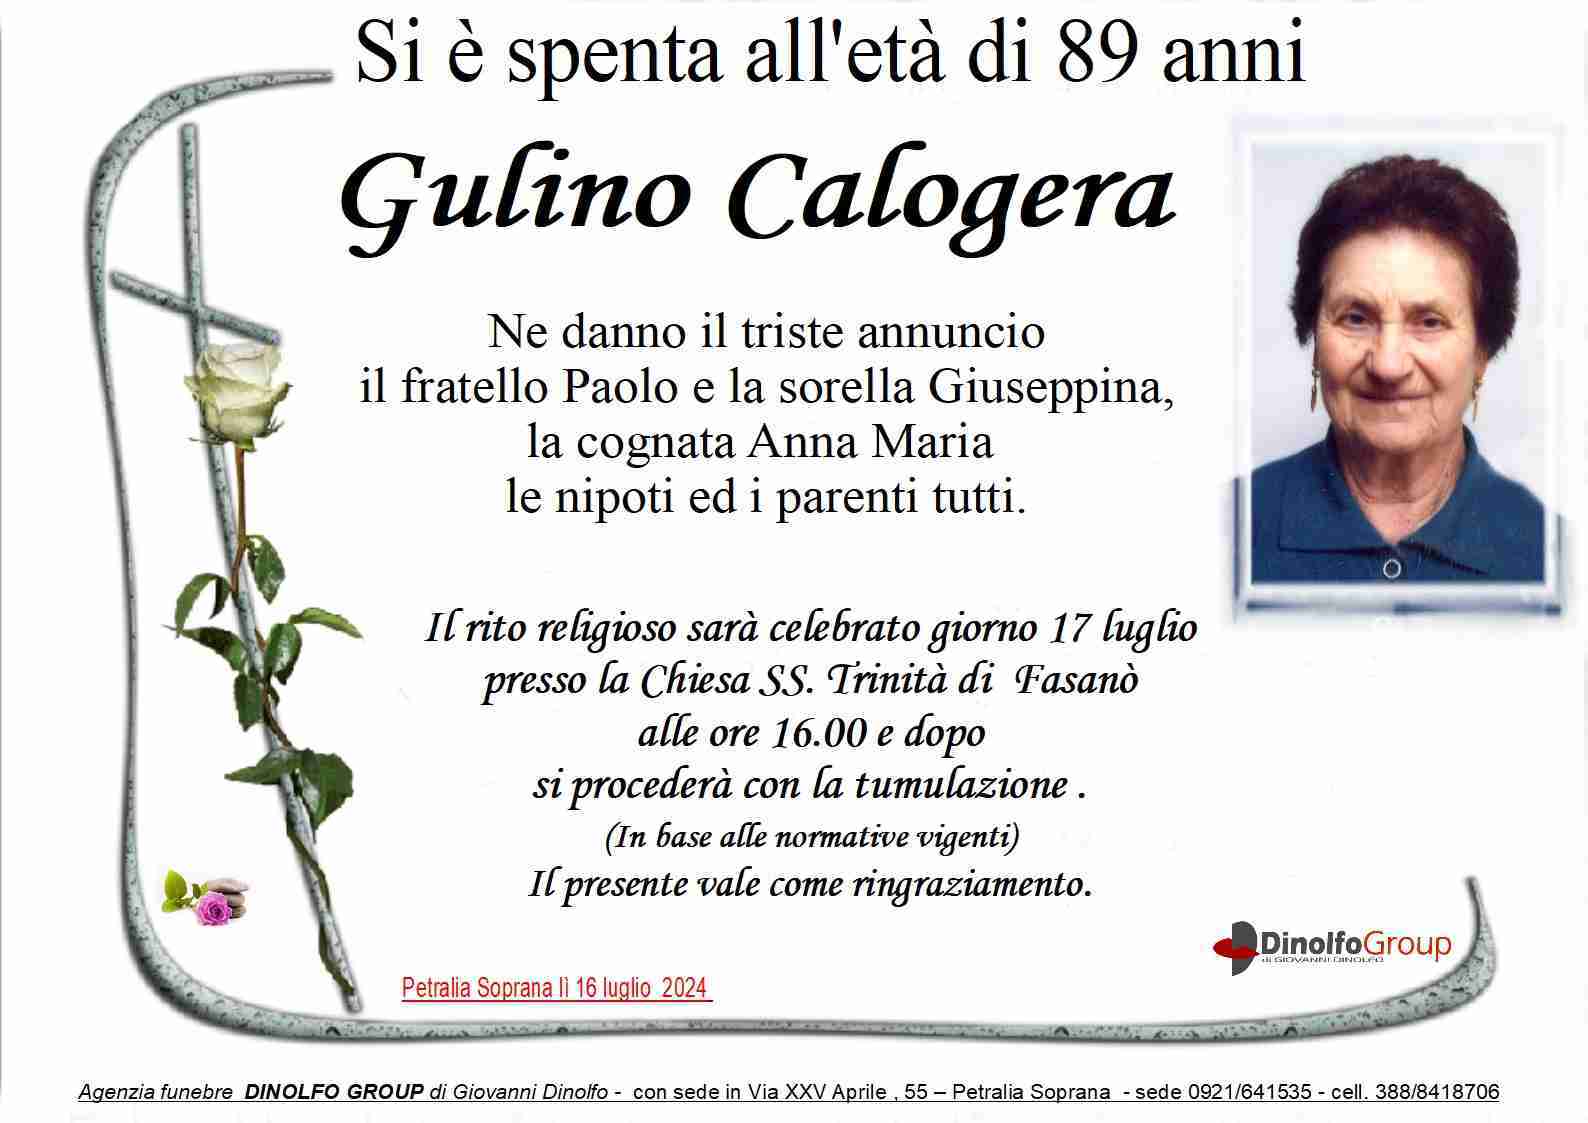 Calogera Gulino